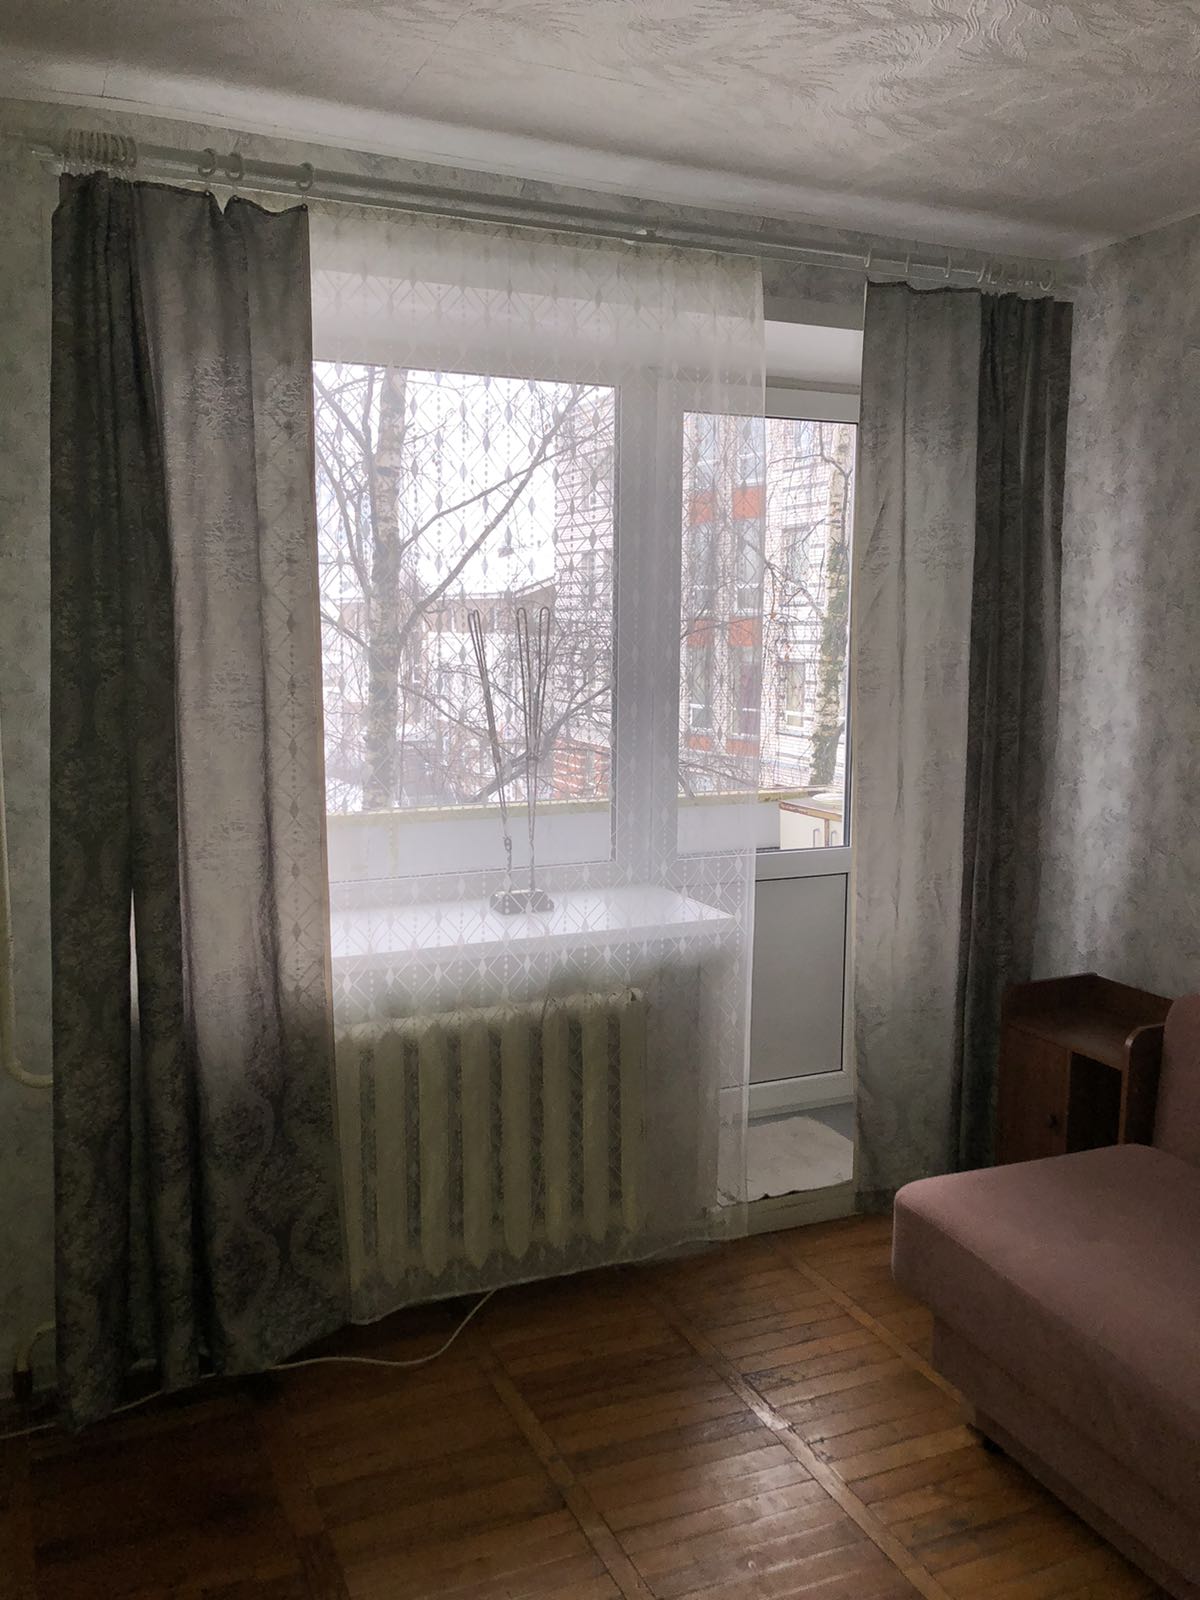 Однокомнатная квартира на ул. Воровского 73 (36кв.м)